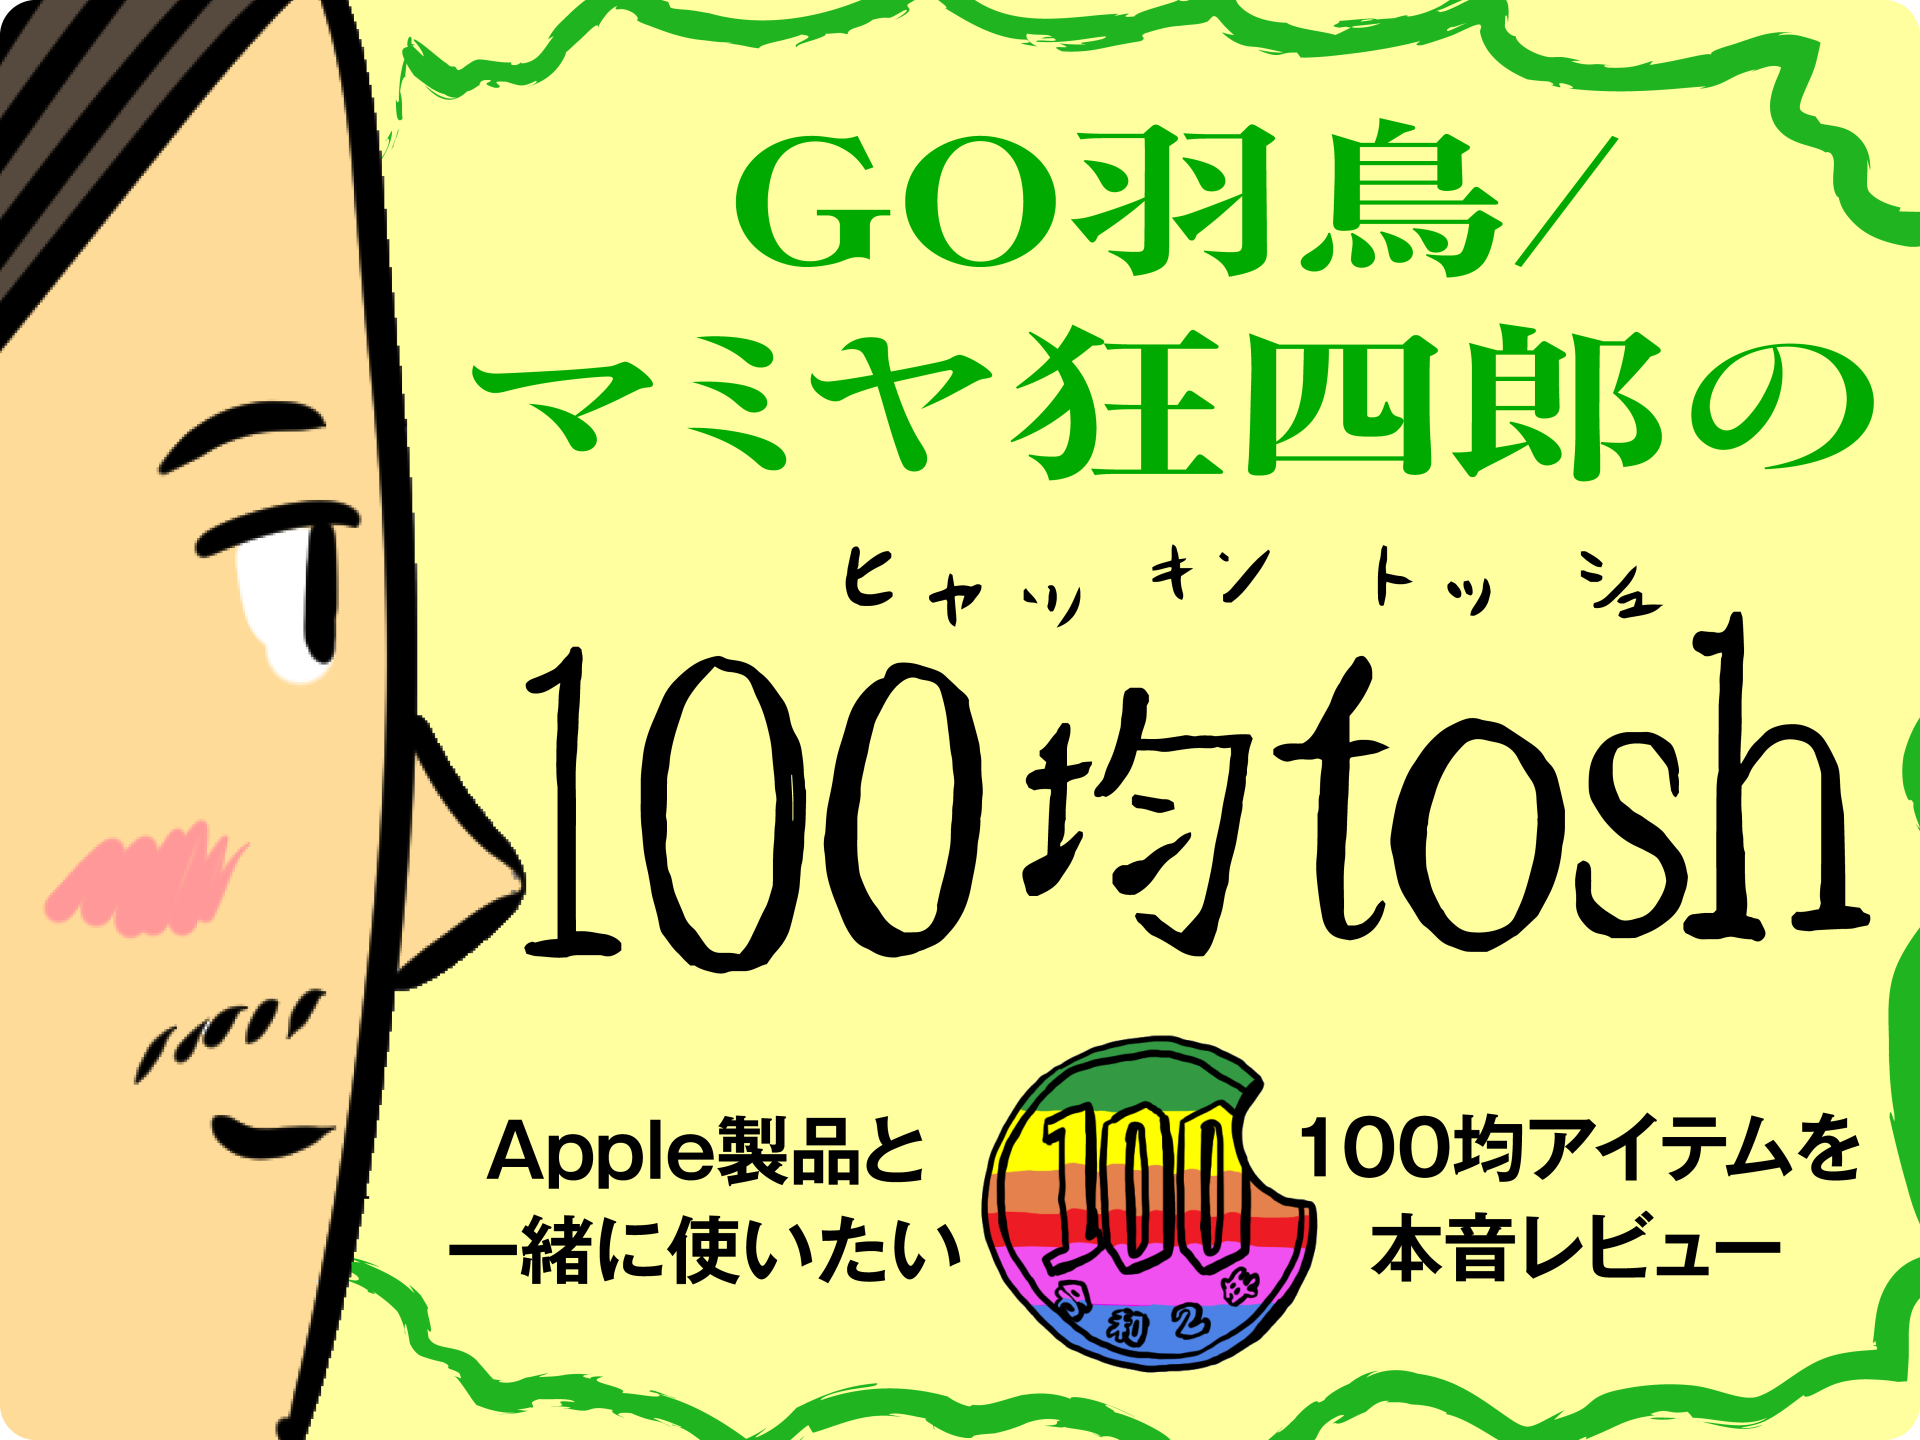 GO羽鳥／マミヤ狂四郎の「100均tosh」